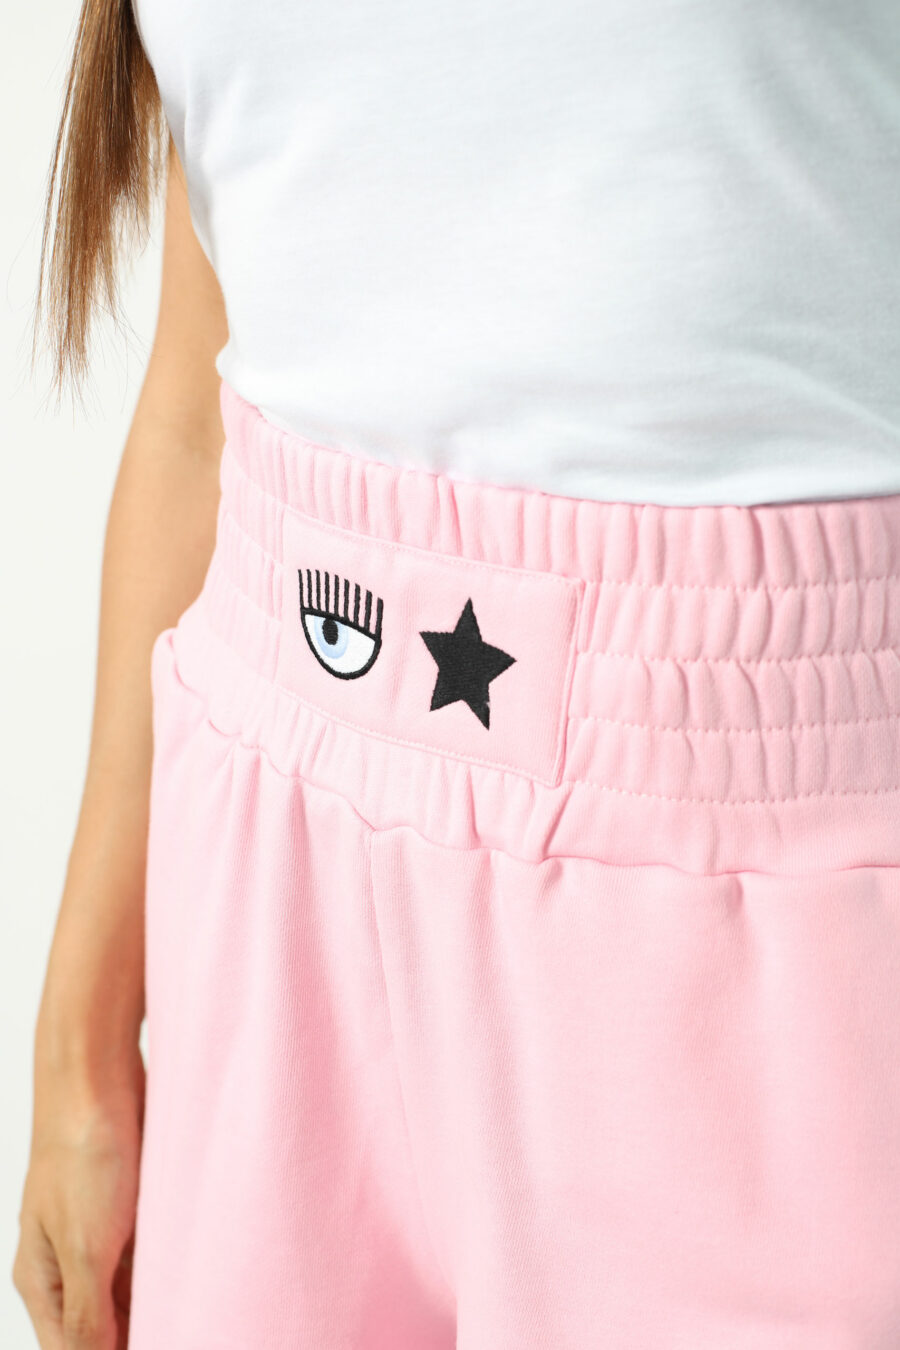 Trainingshose rosa Shorts mit Auge und Stern-Logo - Fotos 2625